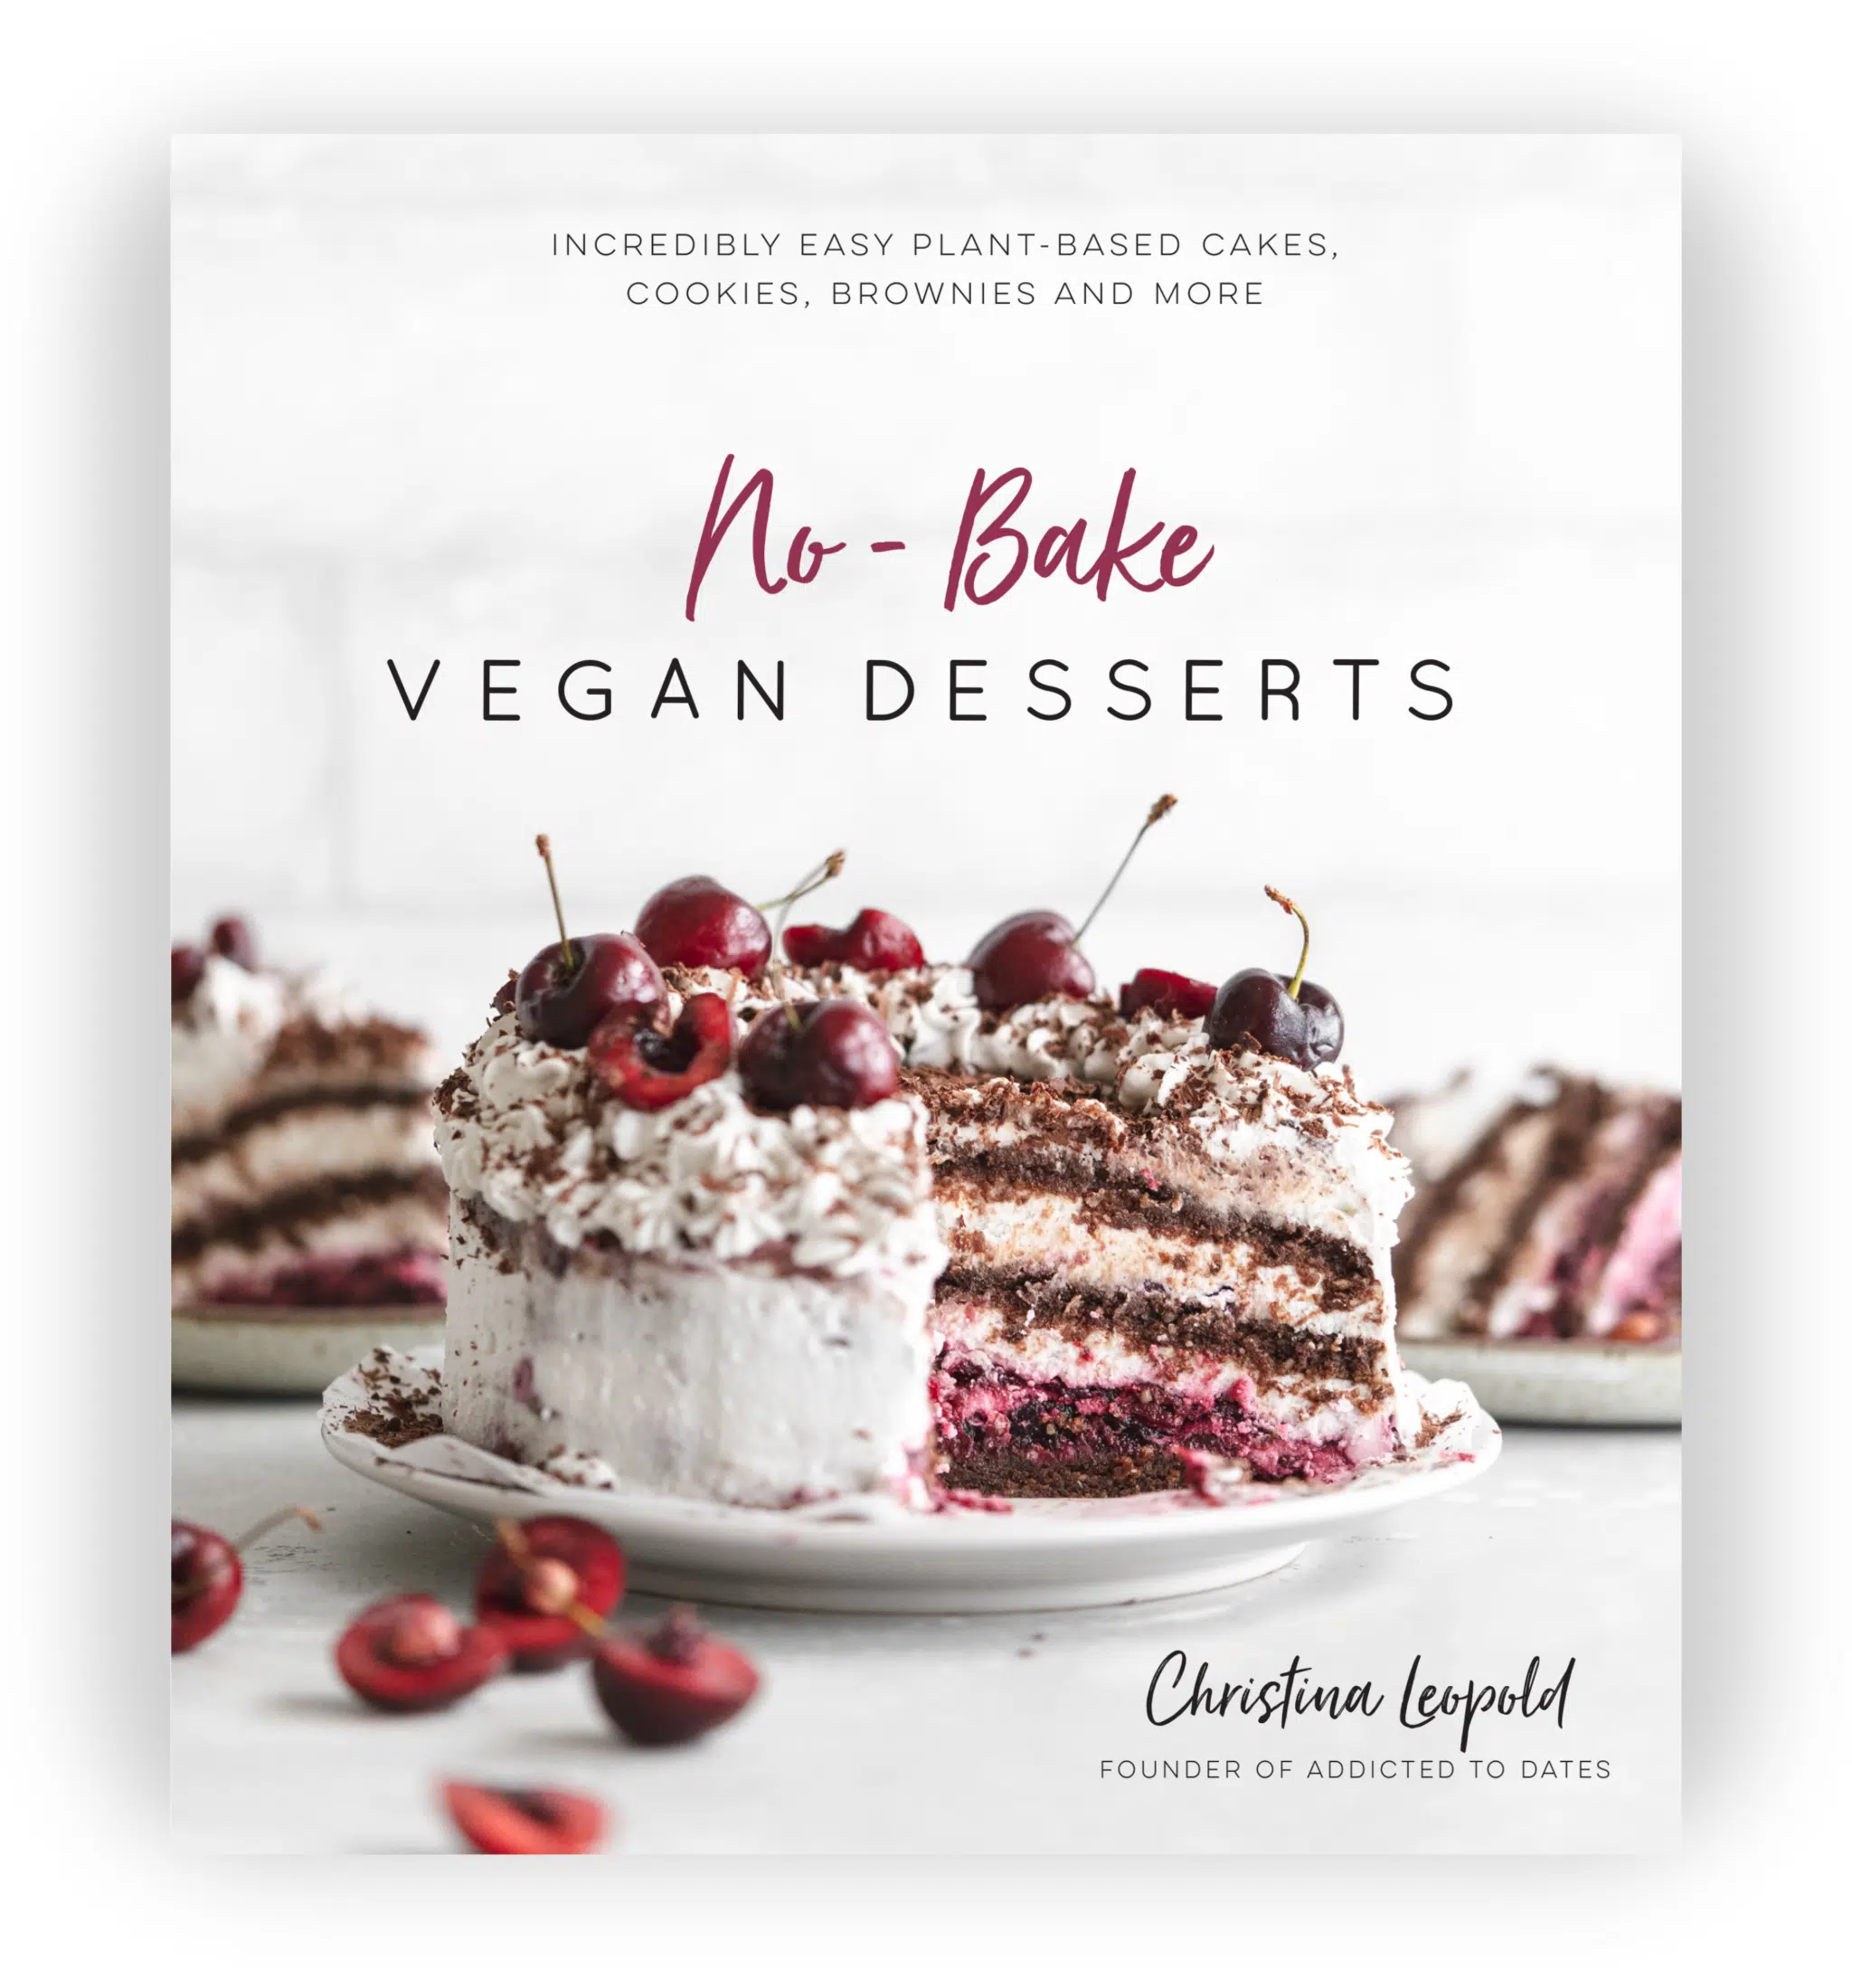 No bake vegan desserts by Christina Leopold Addictedtodates.com